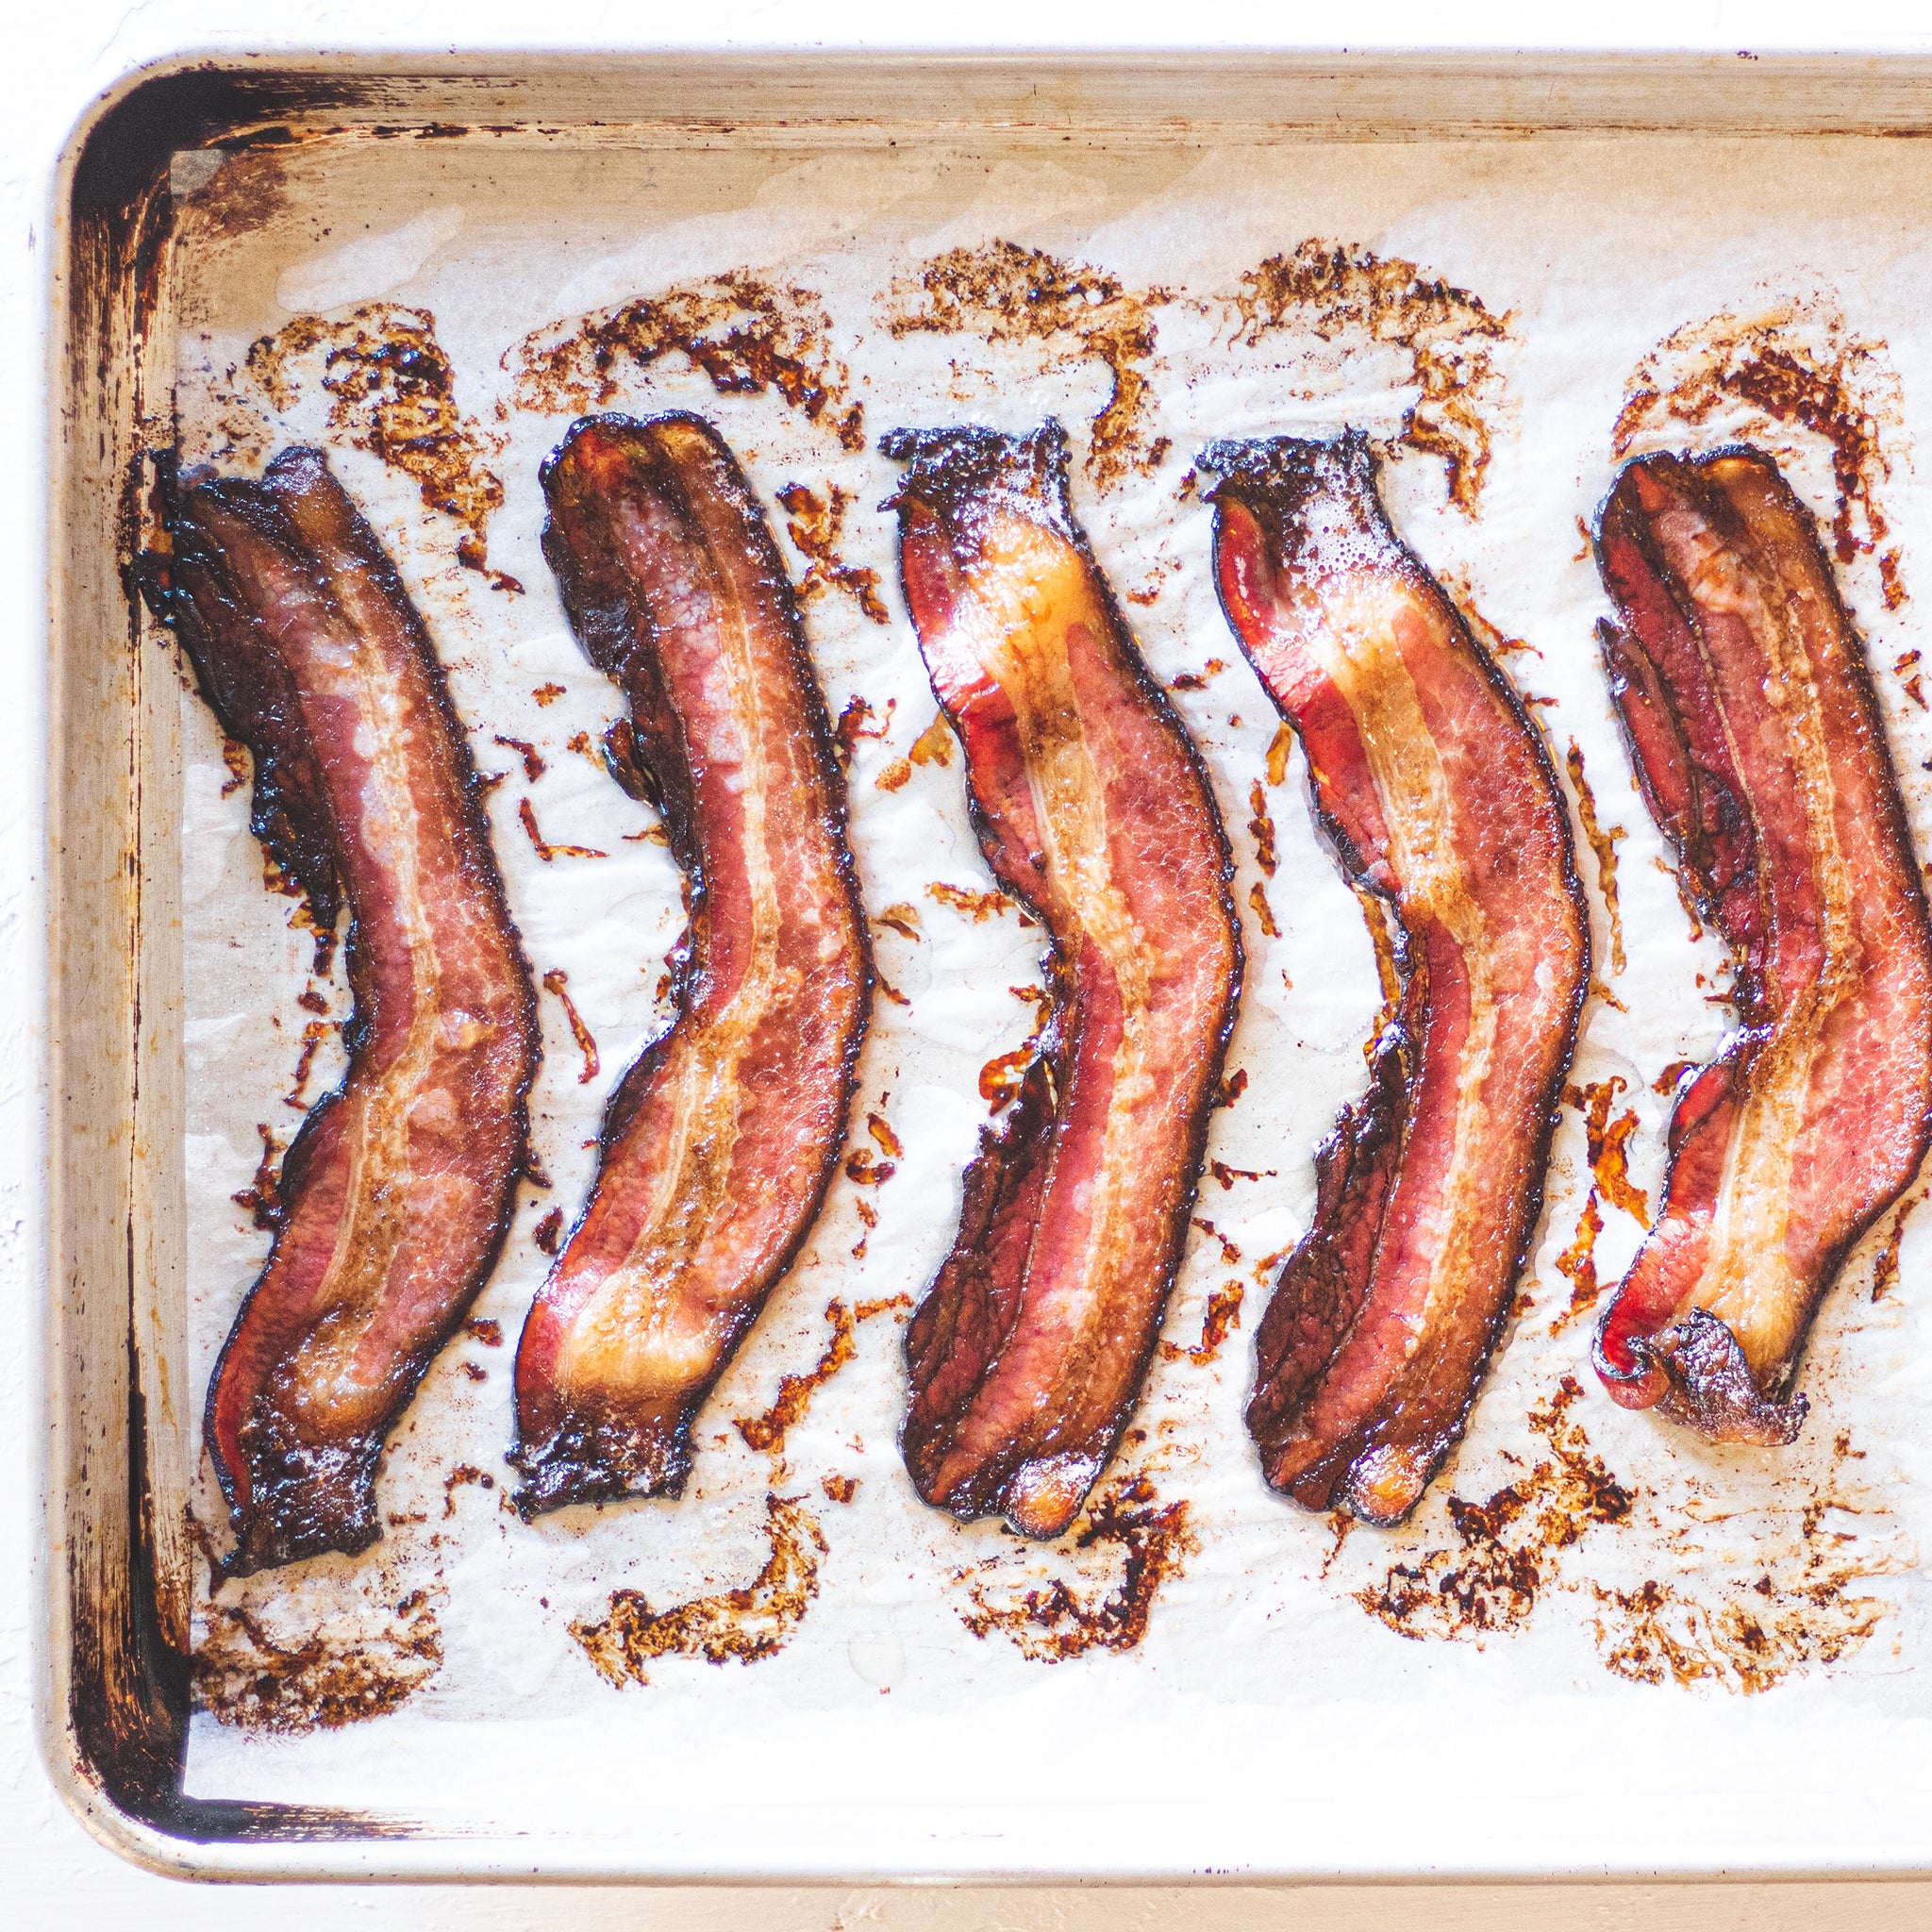 crispy streaky bacon on sheet pan